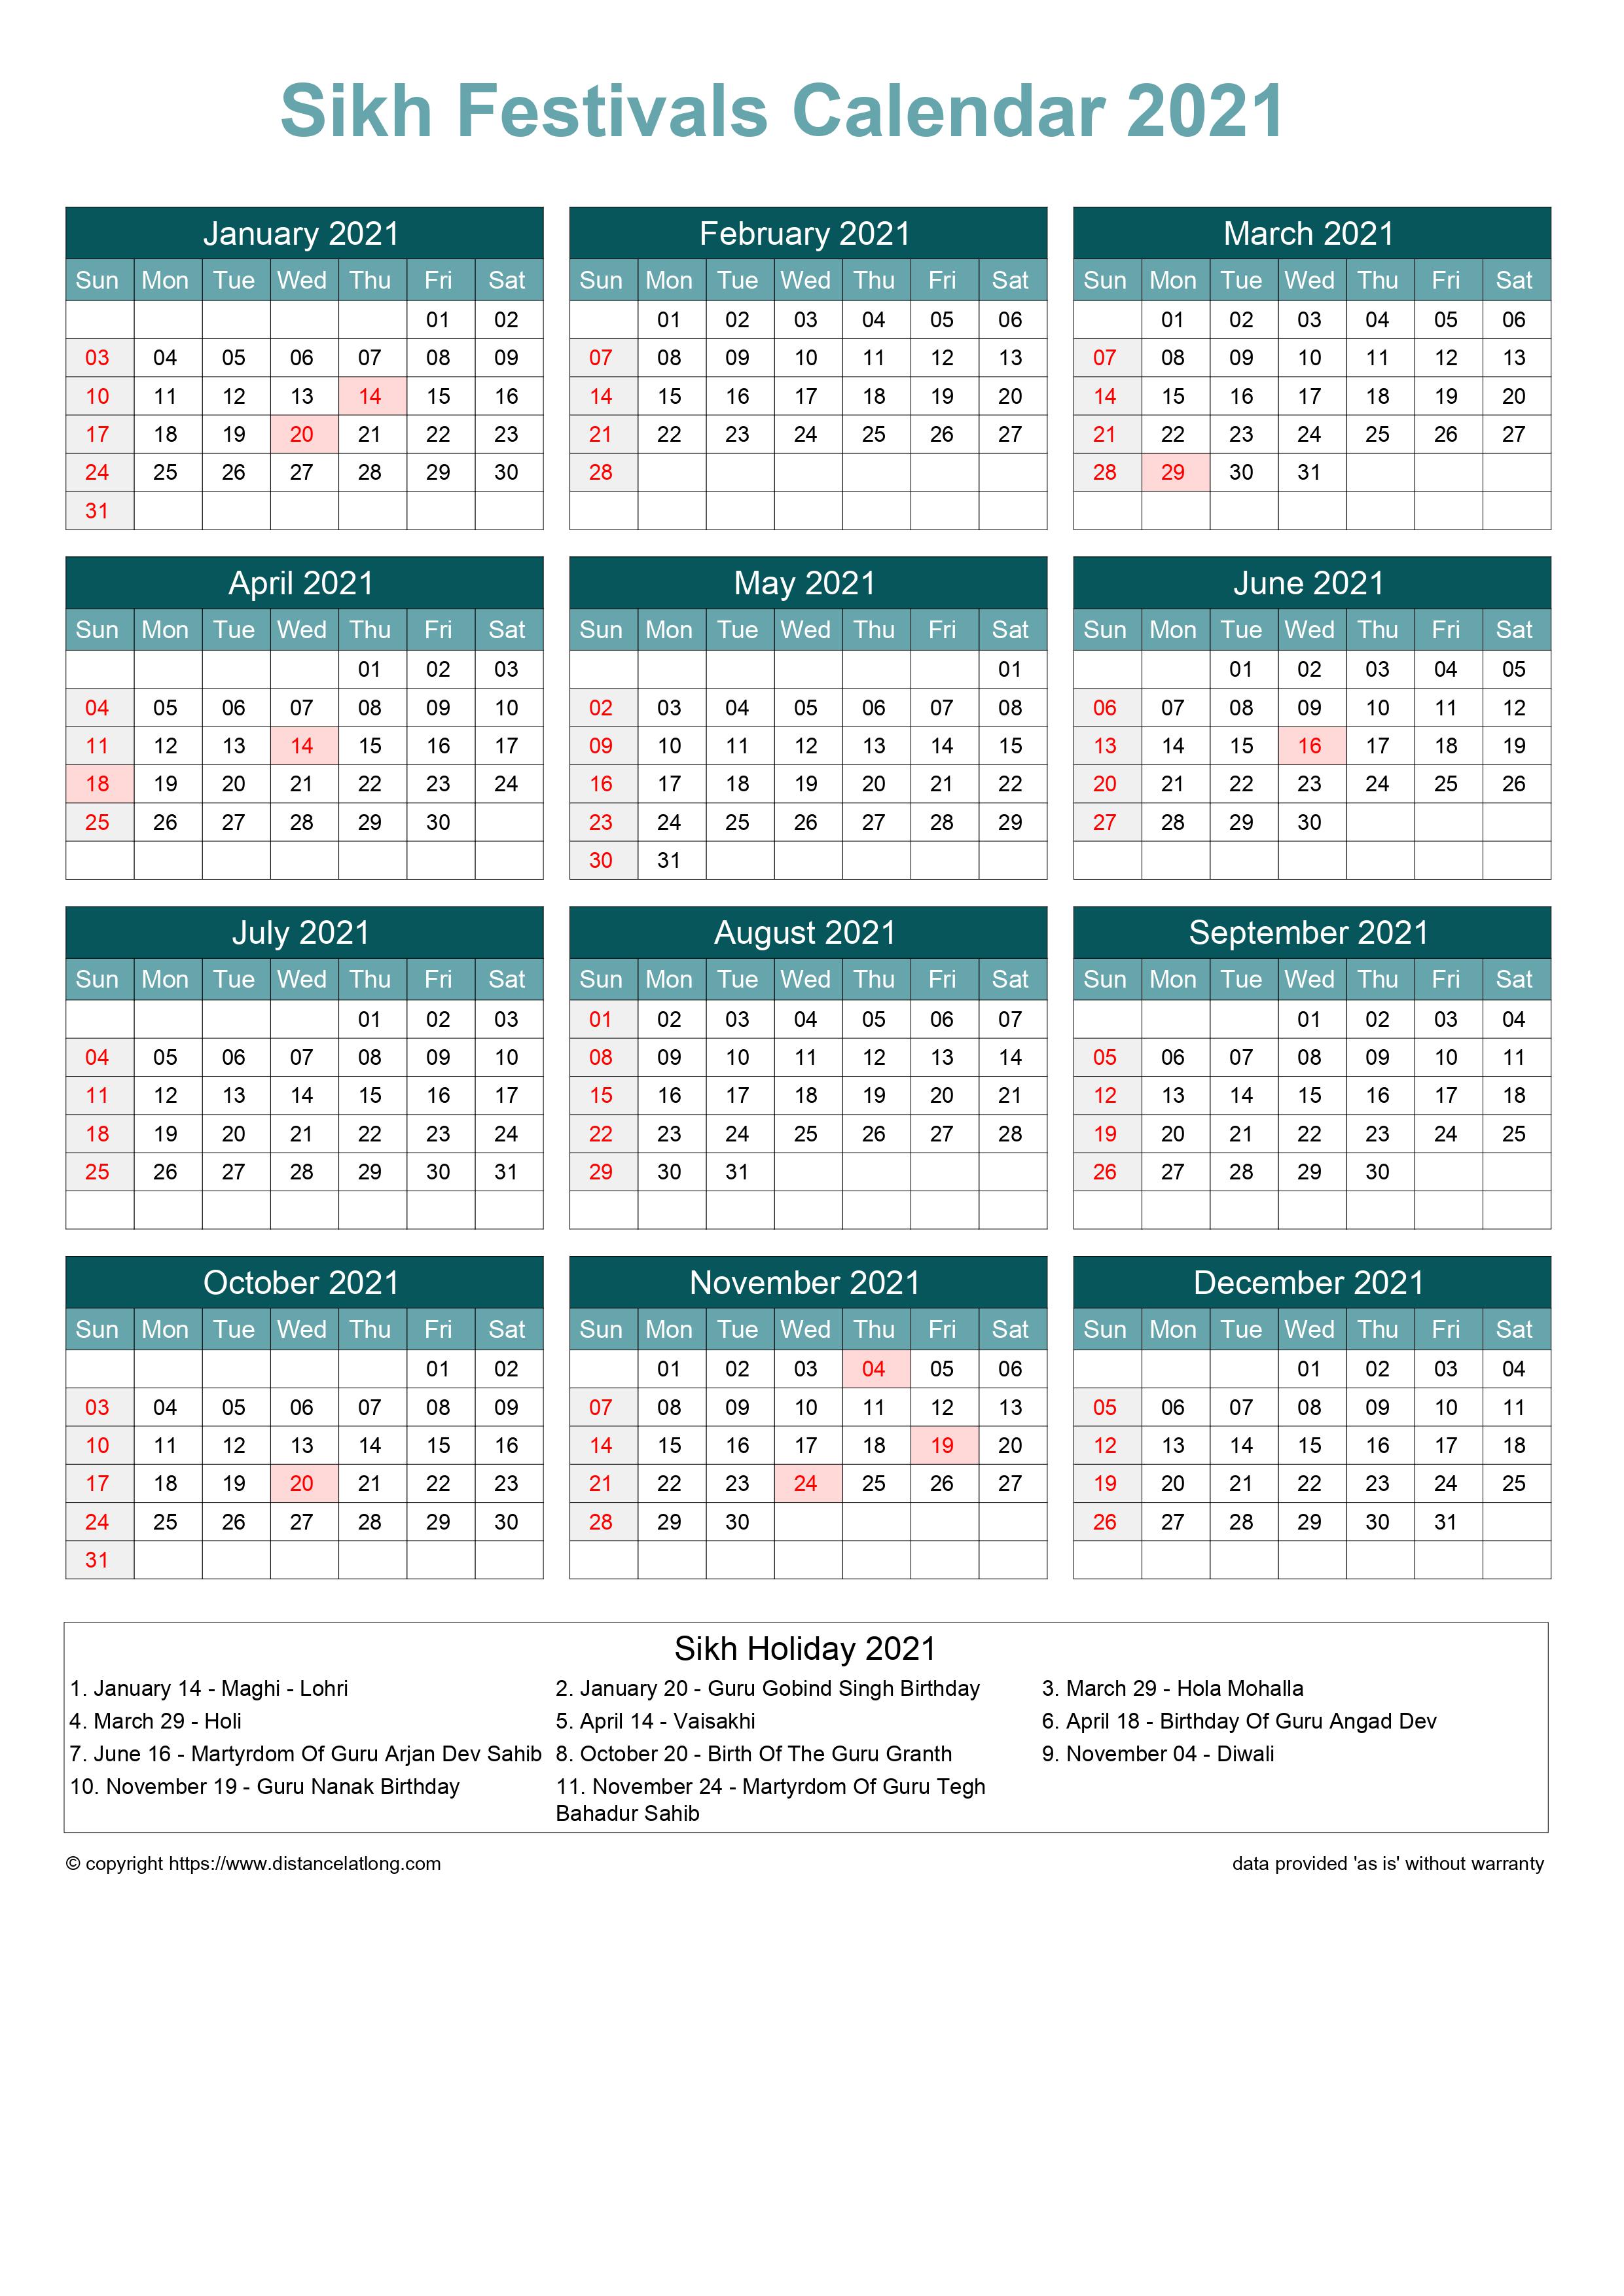 home-health-60-day-episode-calendar-schedule-2019-doc-1-6mb-kayden